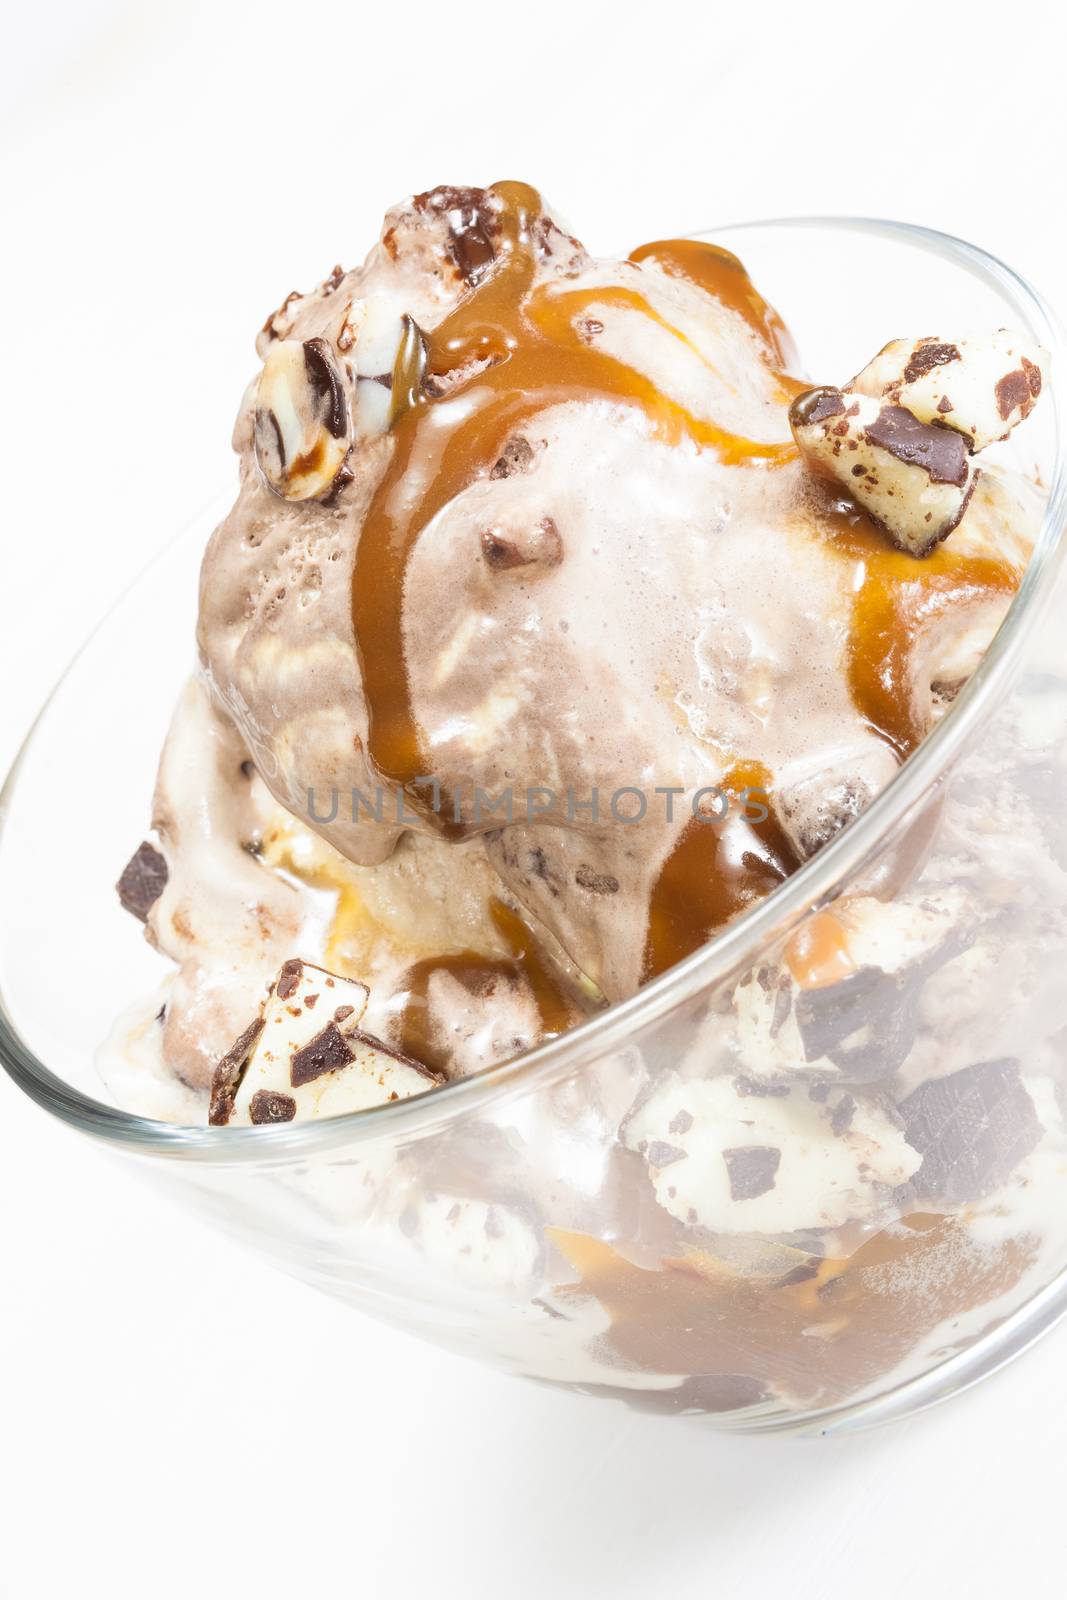 Ice Cream Sundae topped with caramel syrup and chocolate truffle